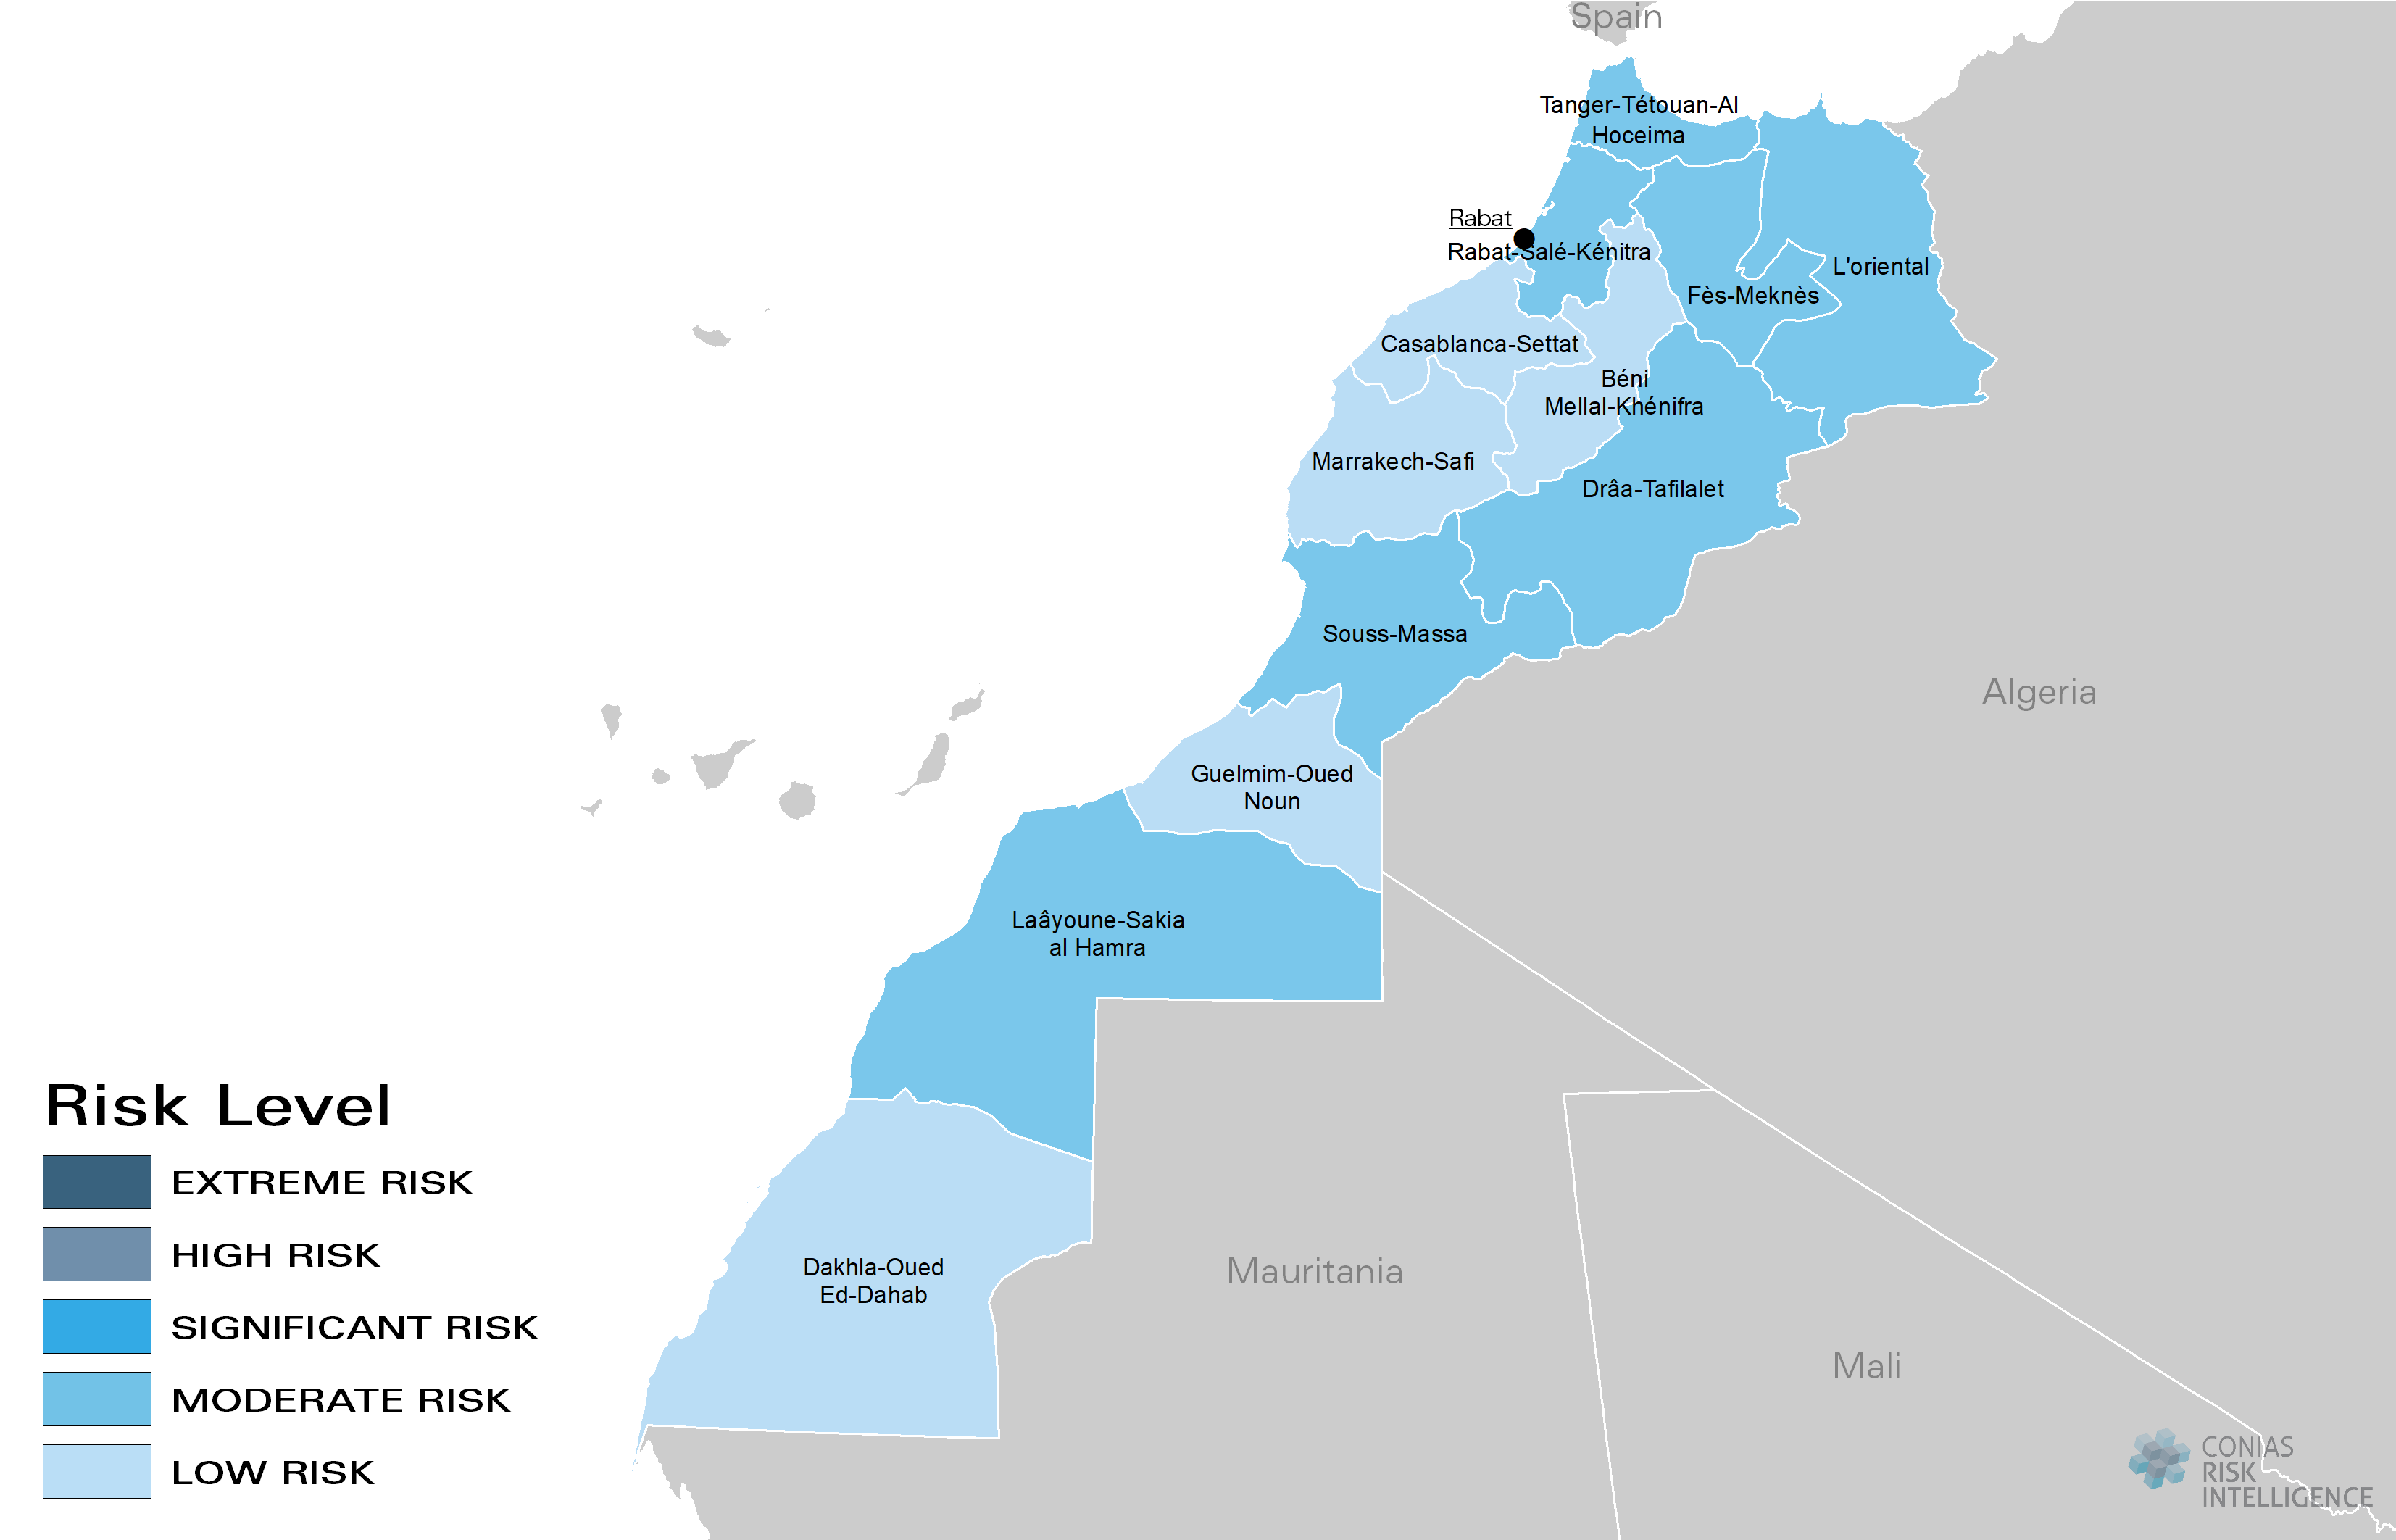 CONIAS Political Risk Map Morocco